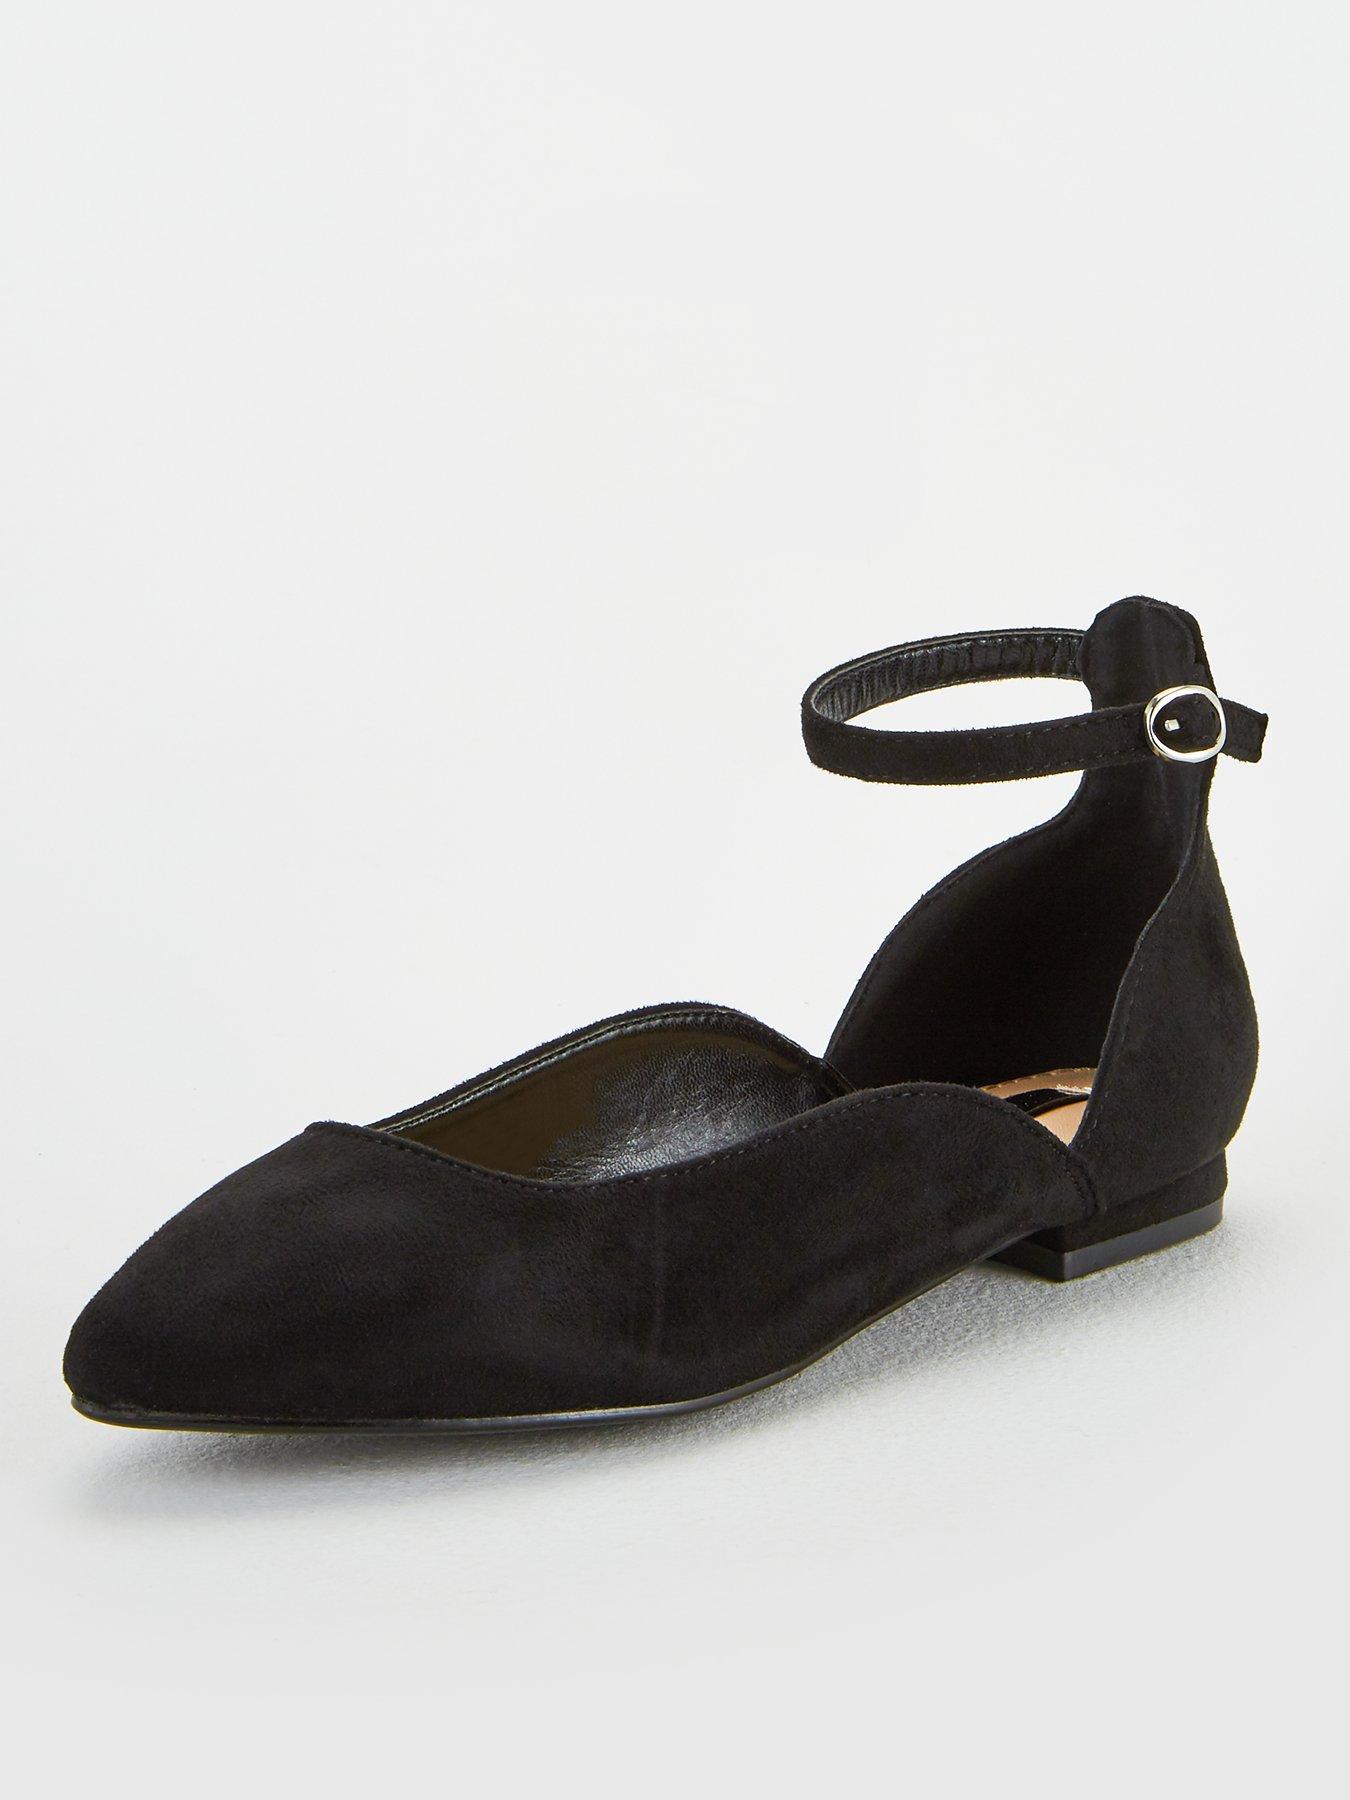 black ballet pumps with ankle strap